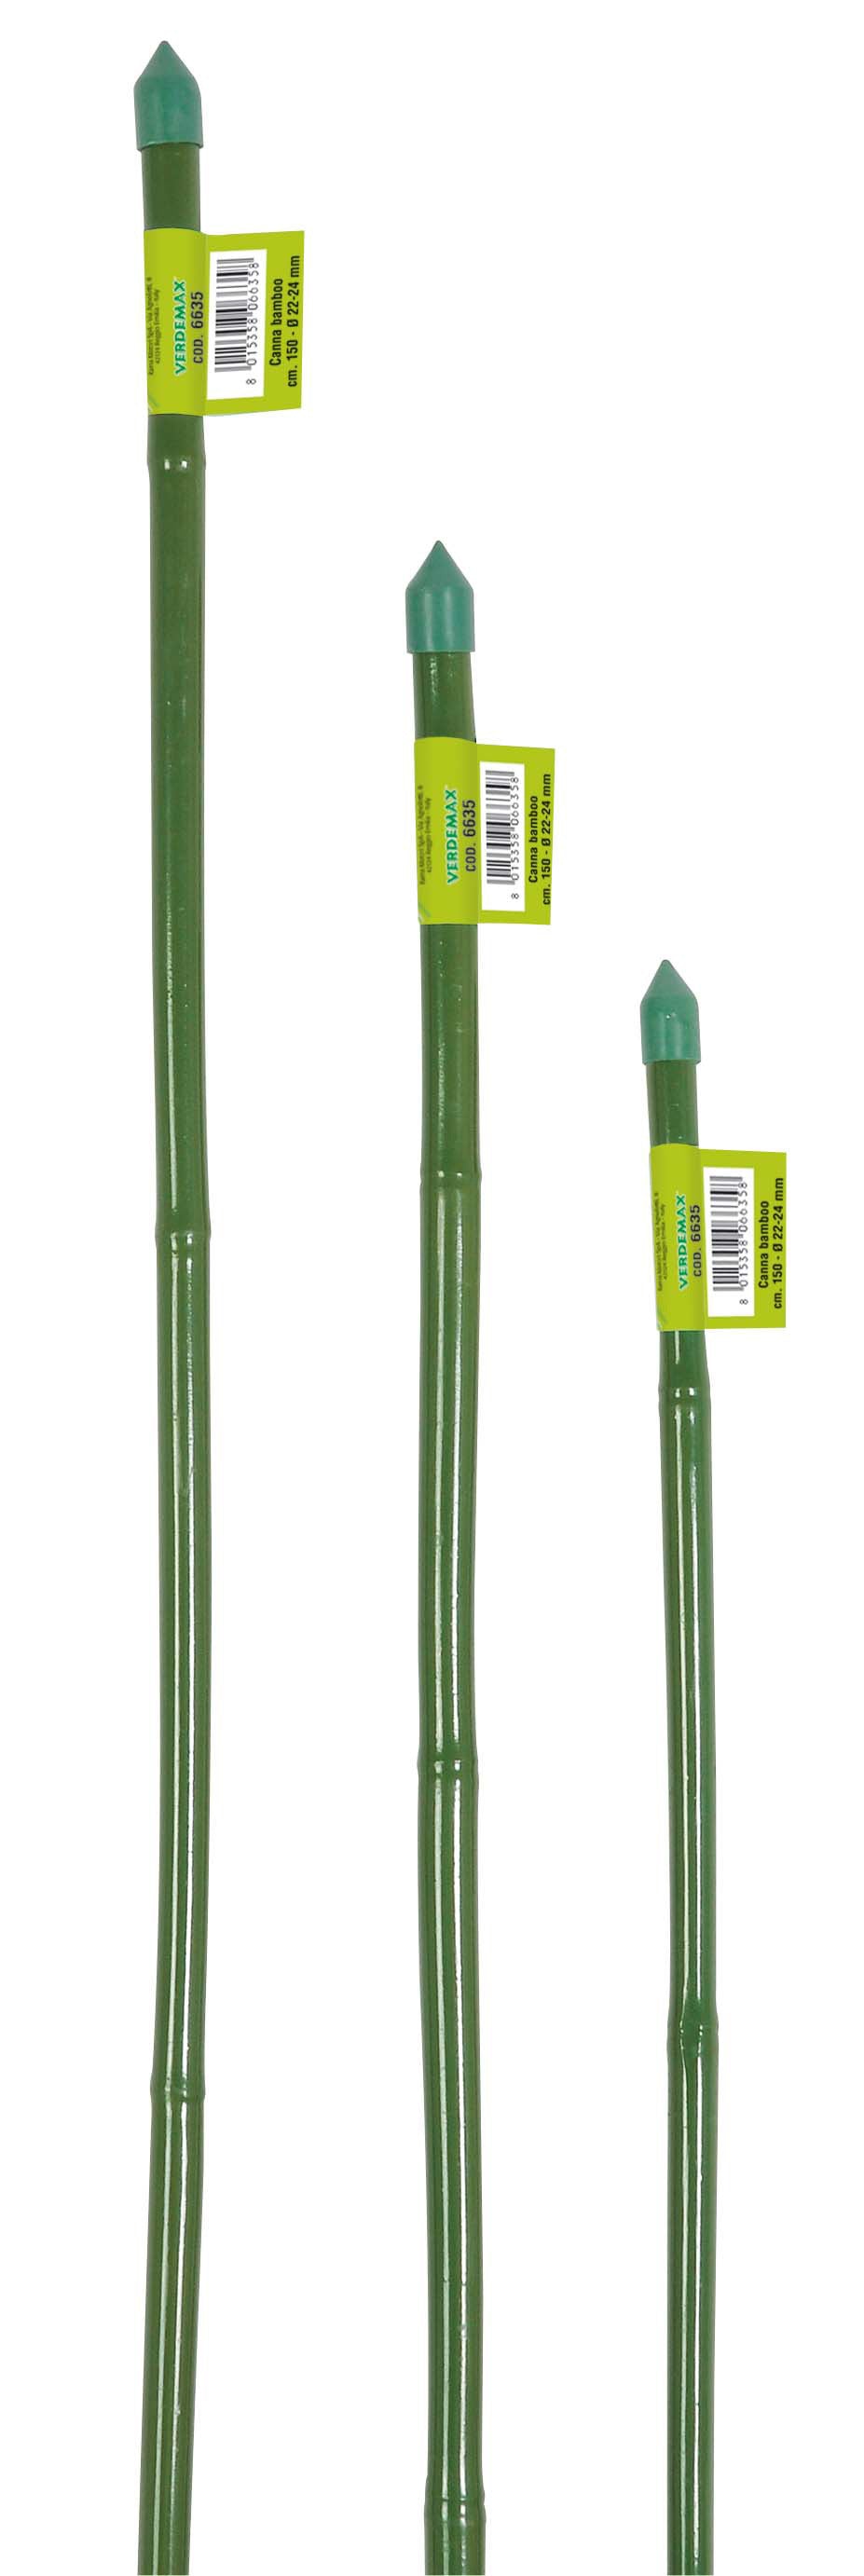 Tutore in bamboo plastificato cm 60 d. 8-10